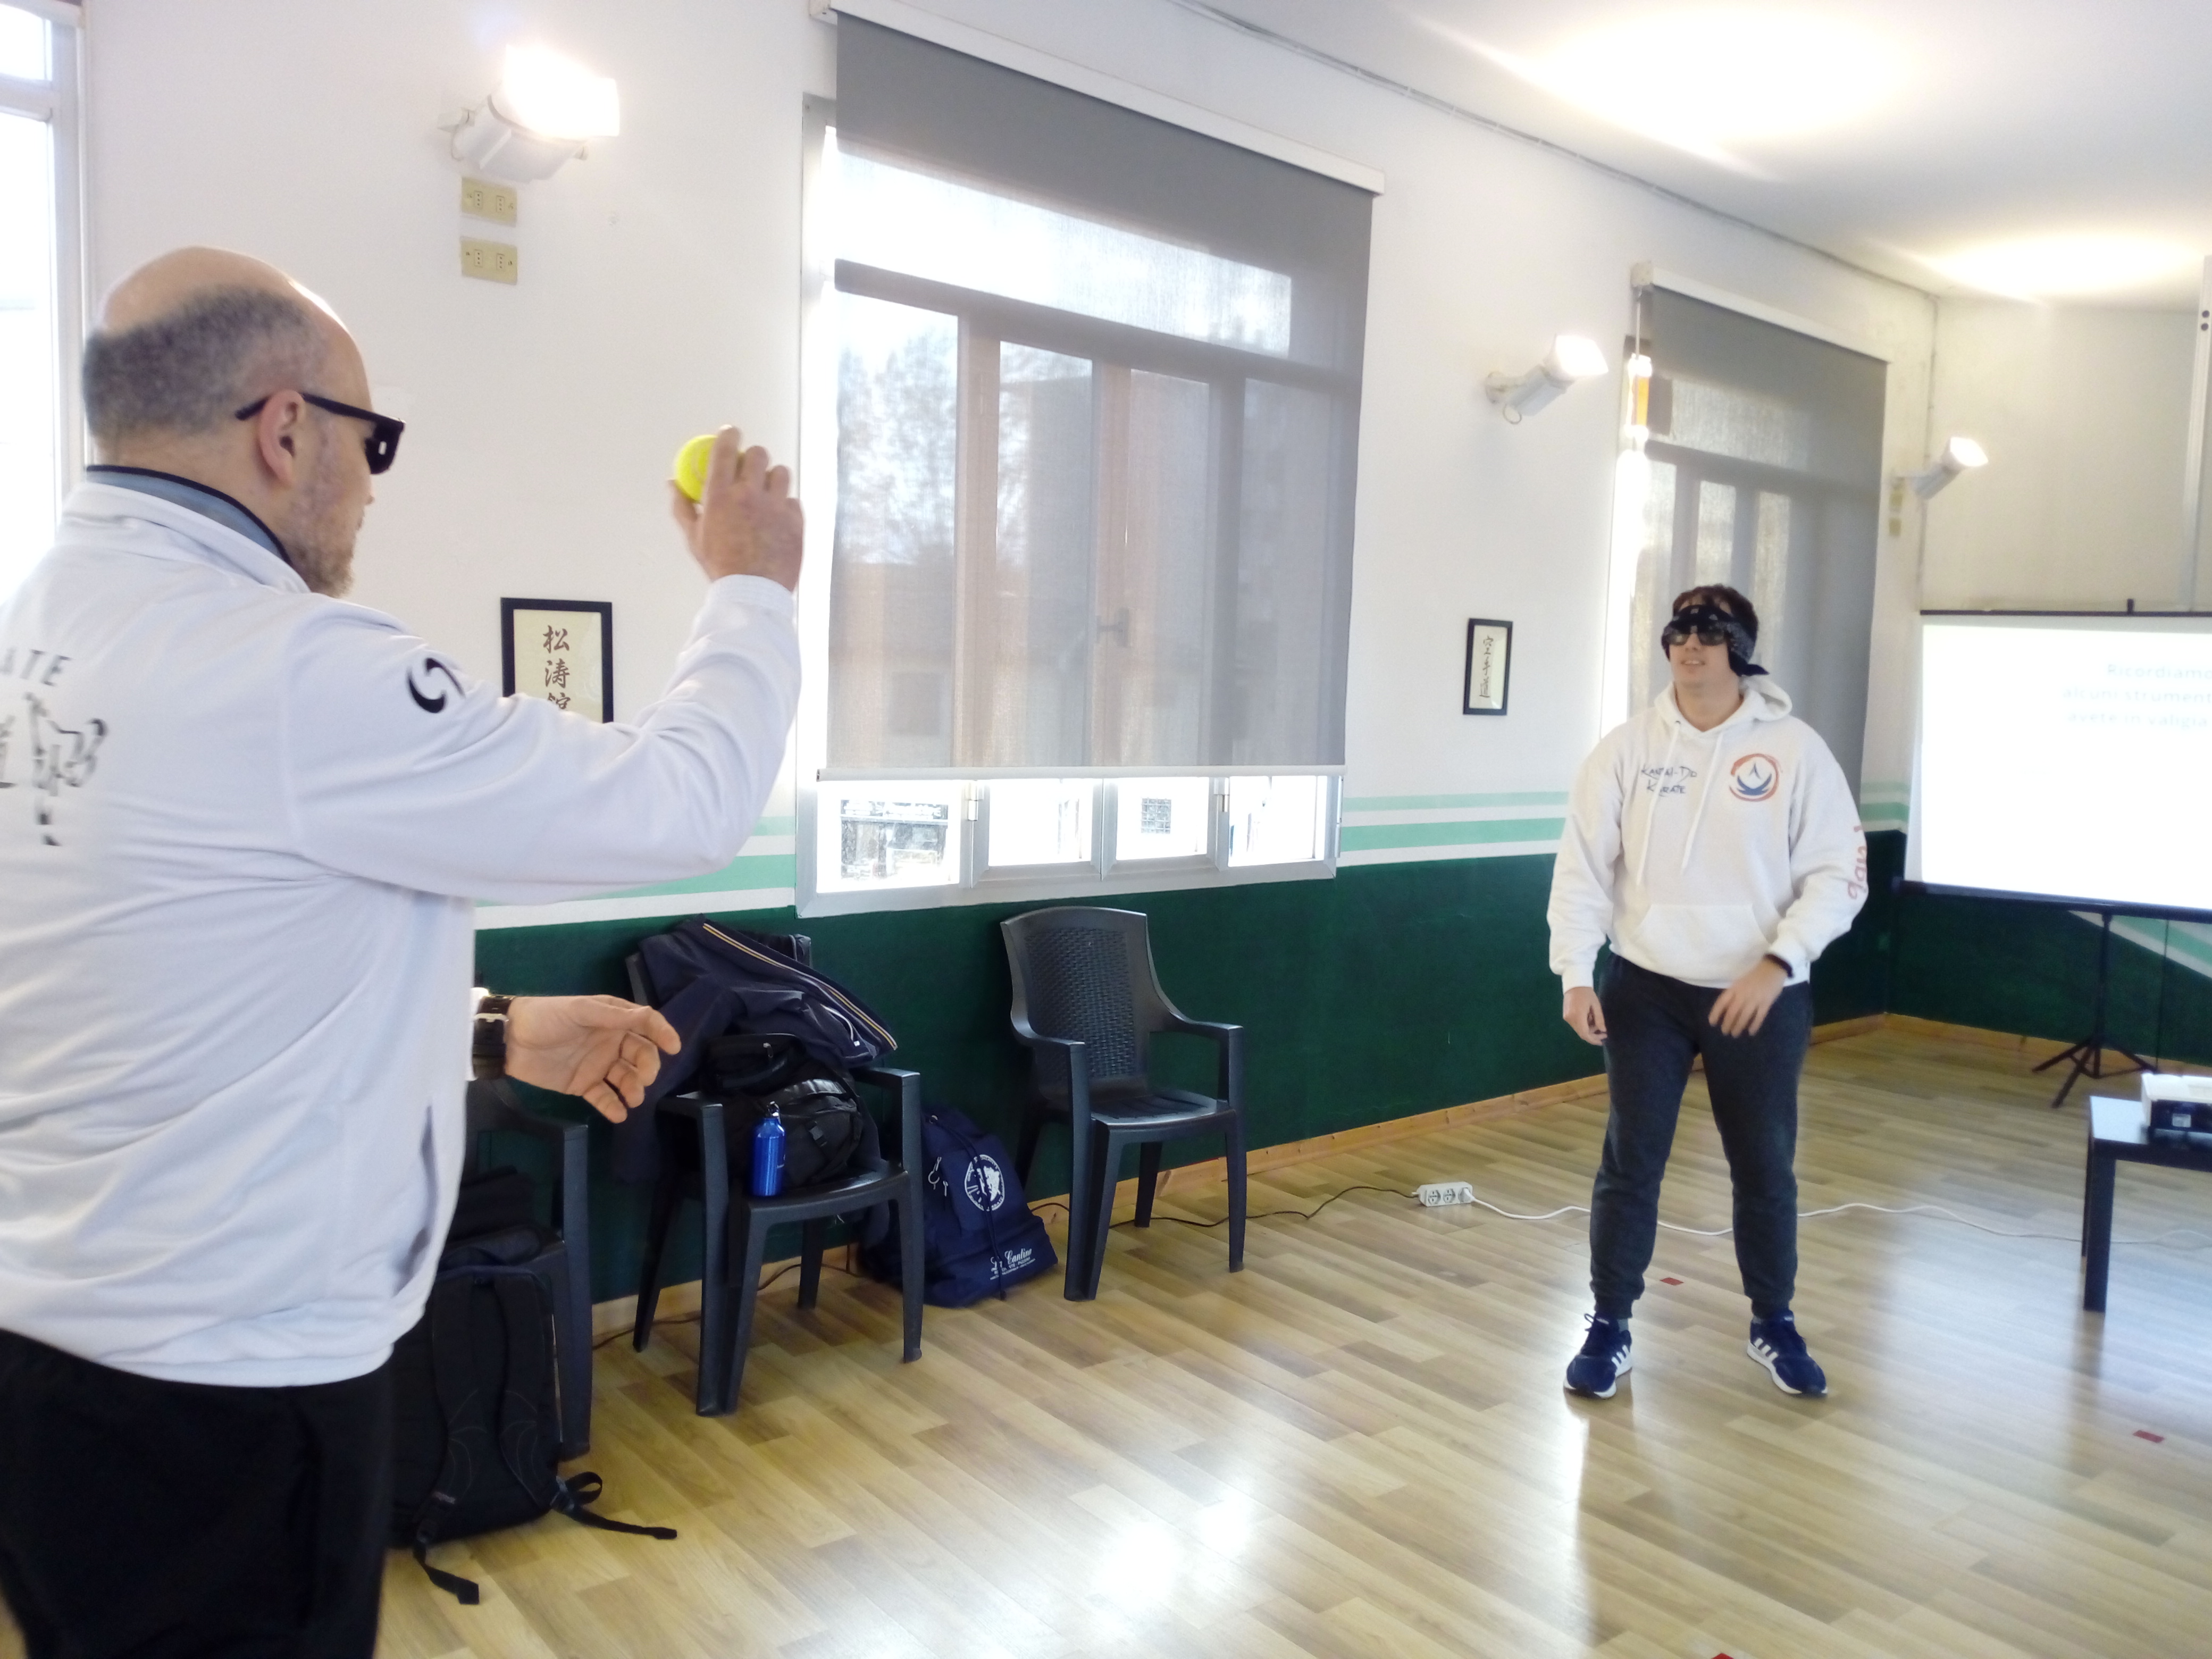 Corso Nazionale di Formazione Karate per Disabilità per Insegnanti Tecnici (2° Parte)